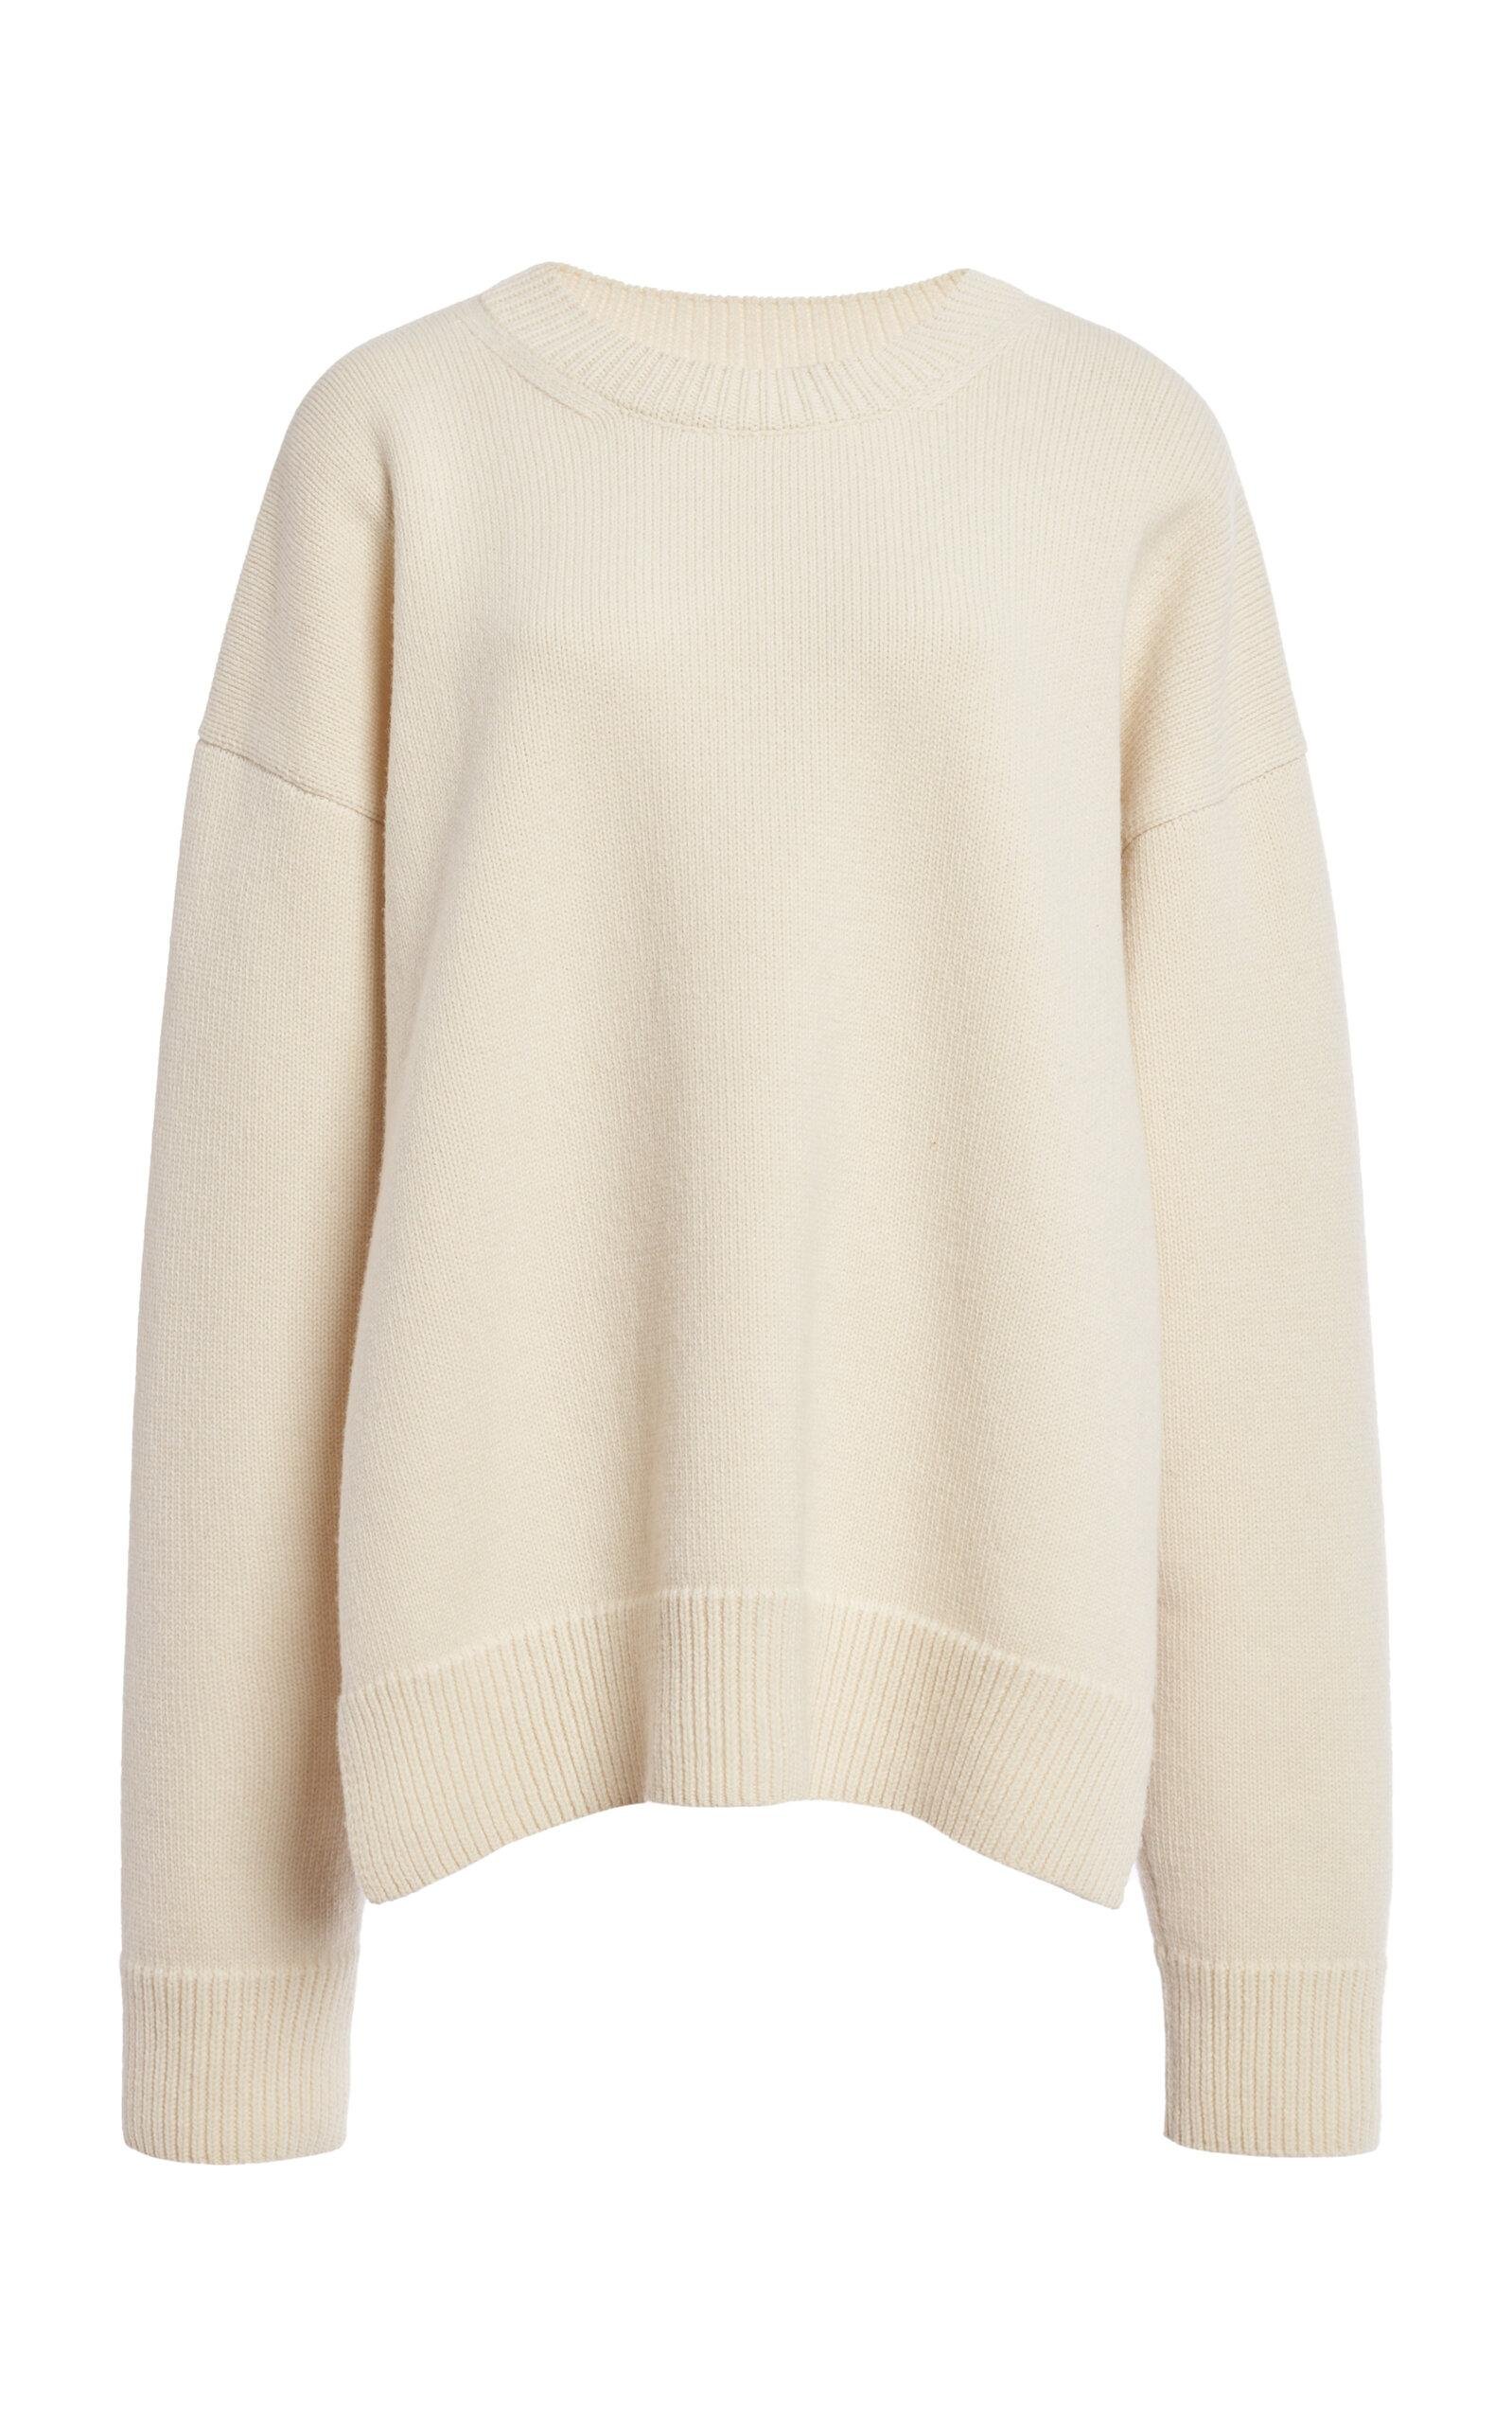 Jil Sander - Knit Wool-Cashmere Sweater - Ivory - EU 34 - Moda Operandi by JIL SANDER